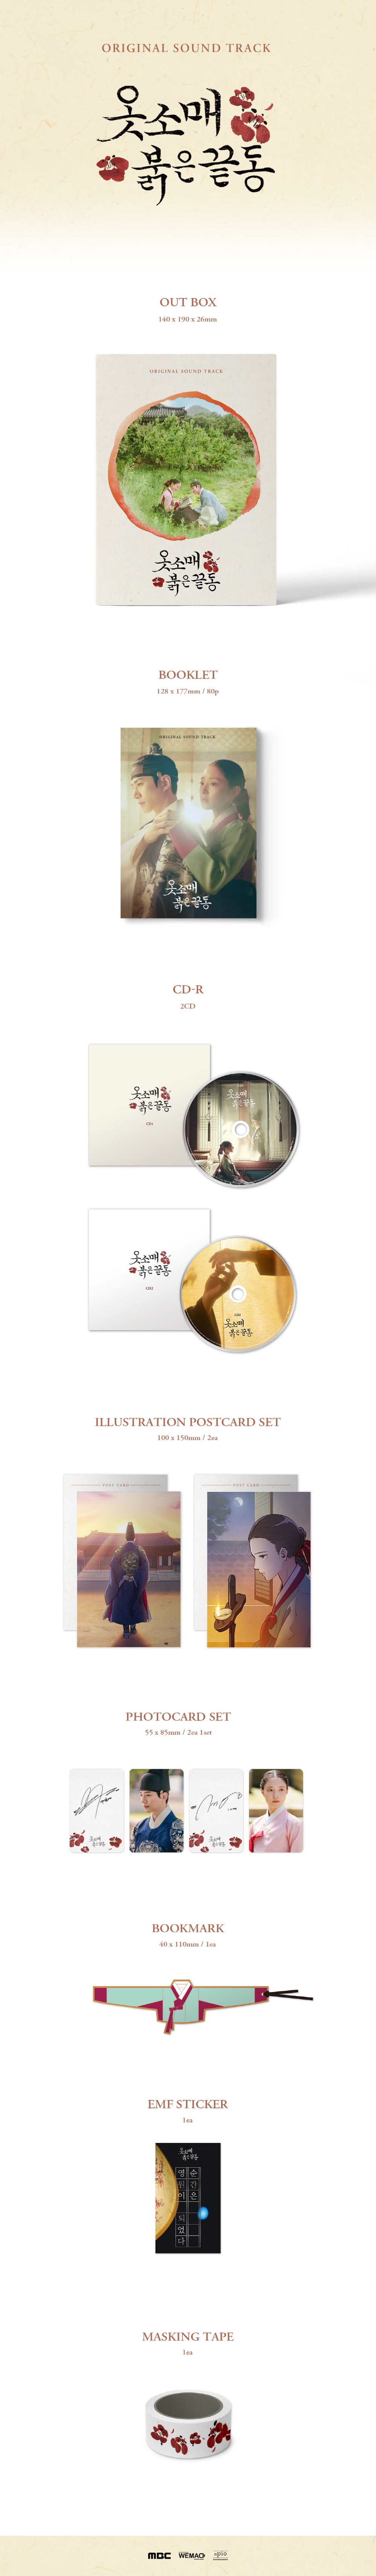 MBC(Korean) Drama -[ THE Red Sleeve ] OST album red album kpop ost photobook ostalbum photocard sleeve